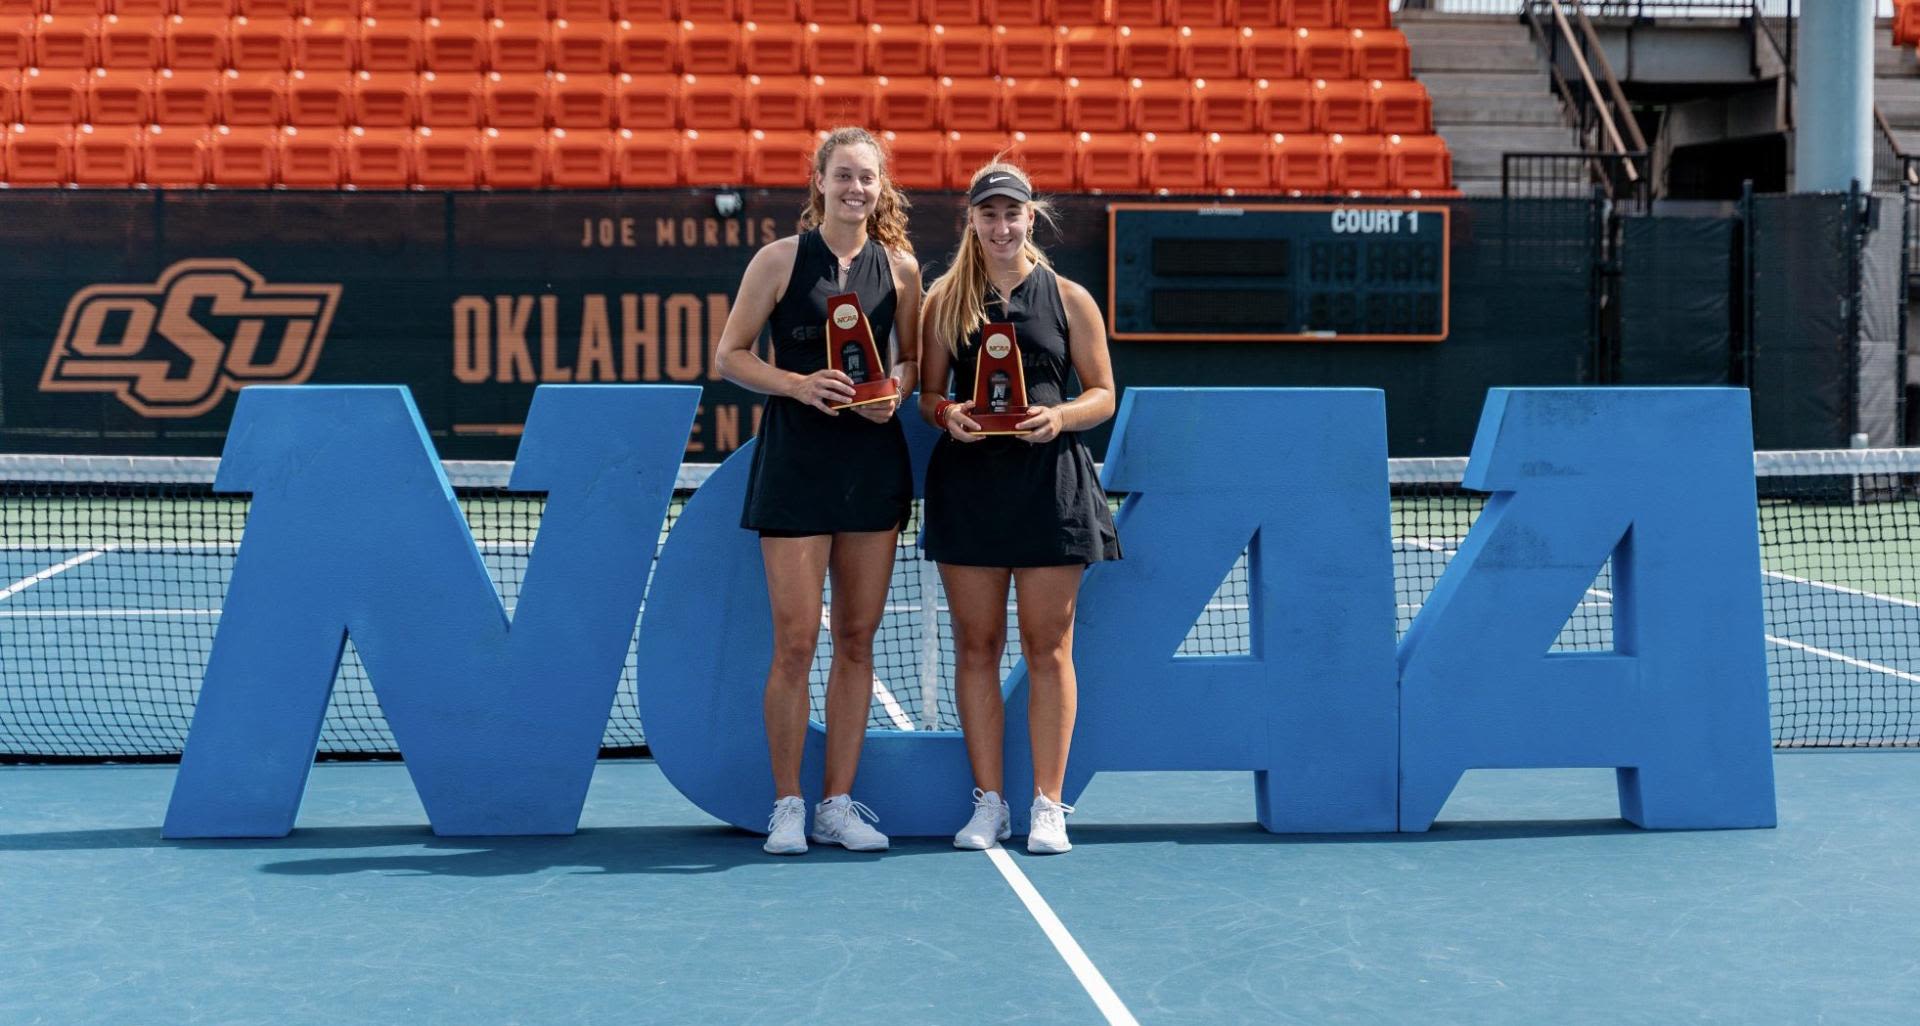 Georgia University won the NCAA women's doubles championship